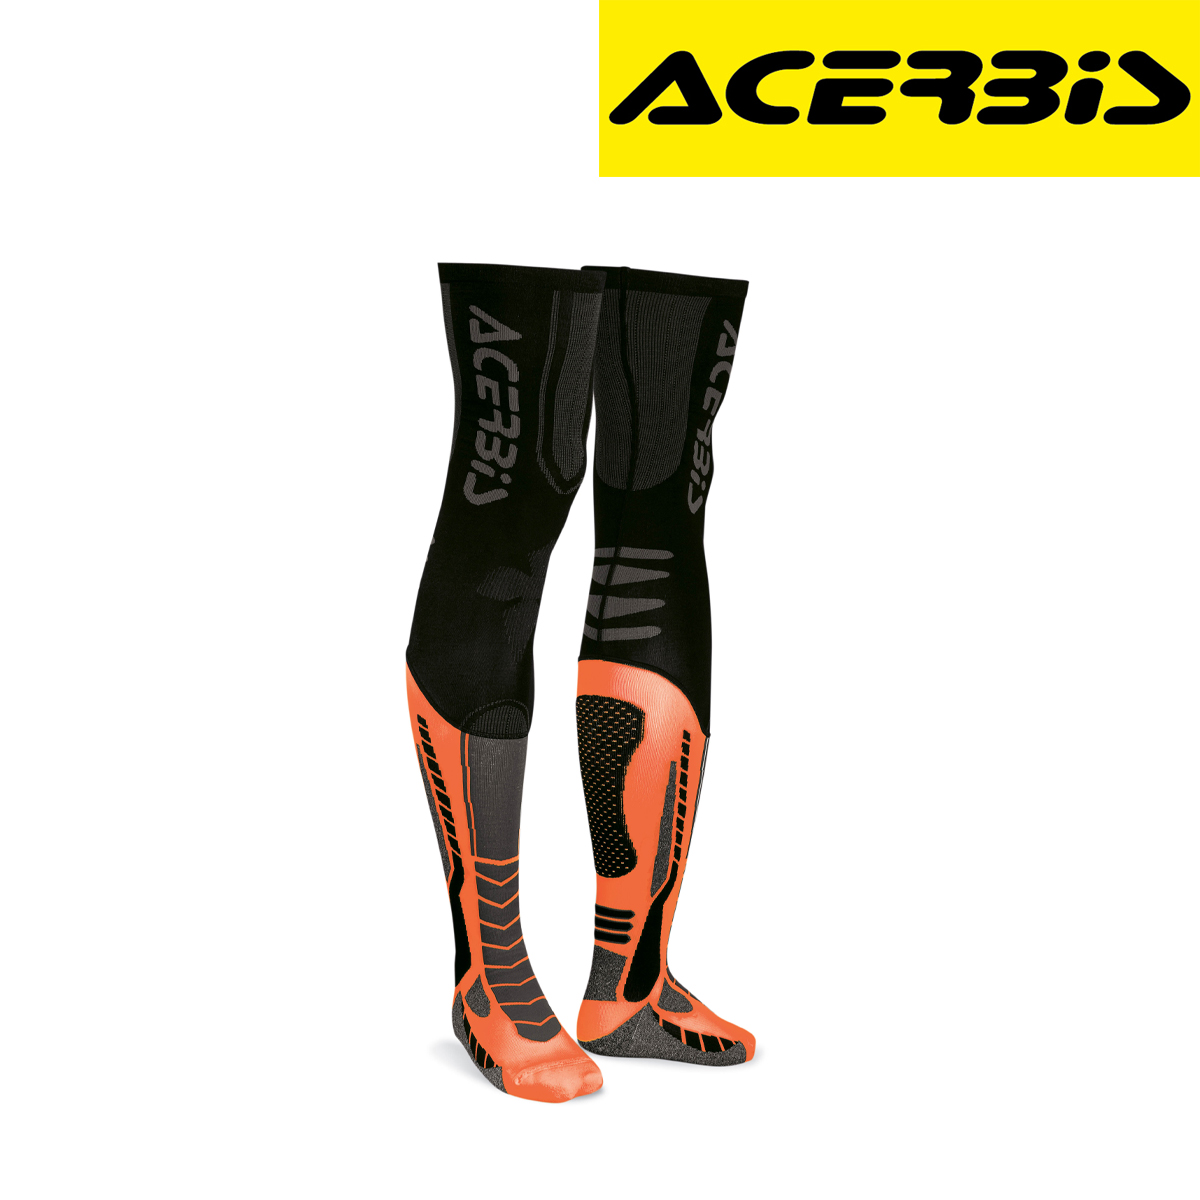 Duboke moto čarape - čarape za motor Acerbis X-Leg Pro - NC